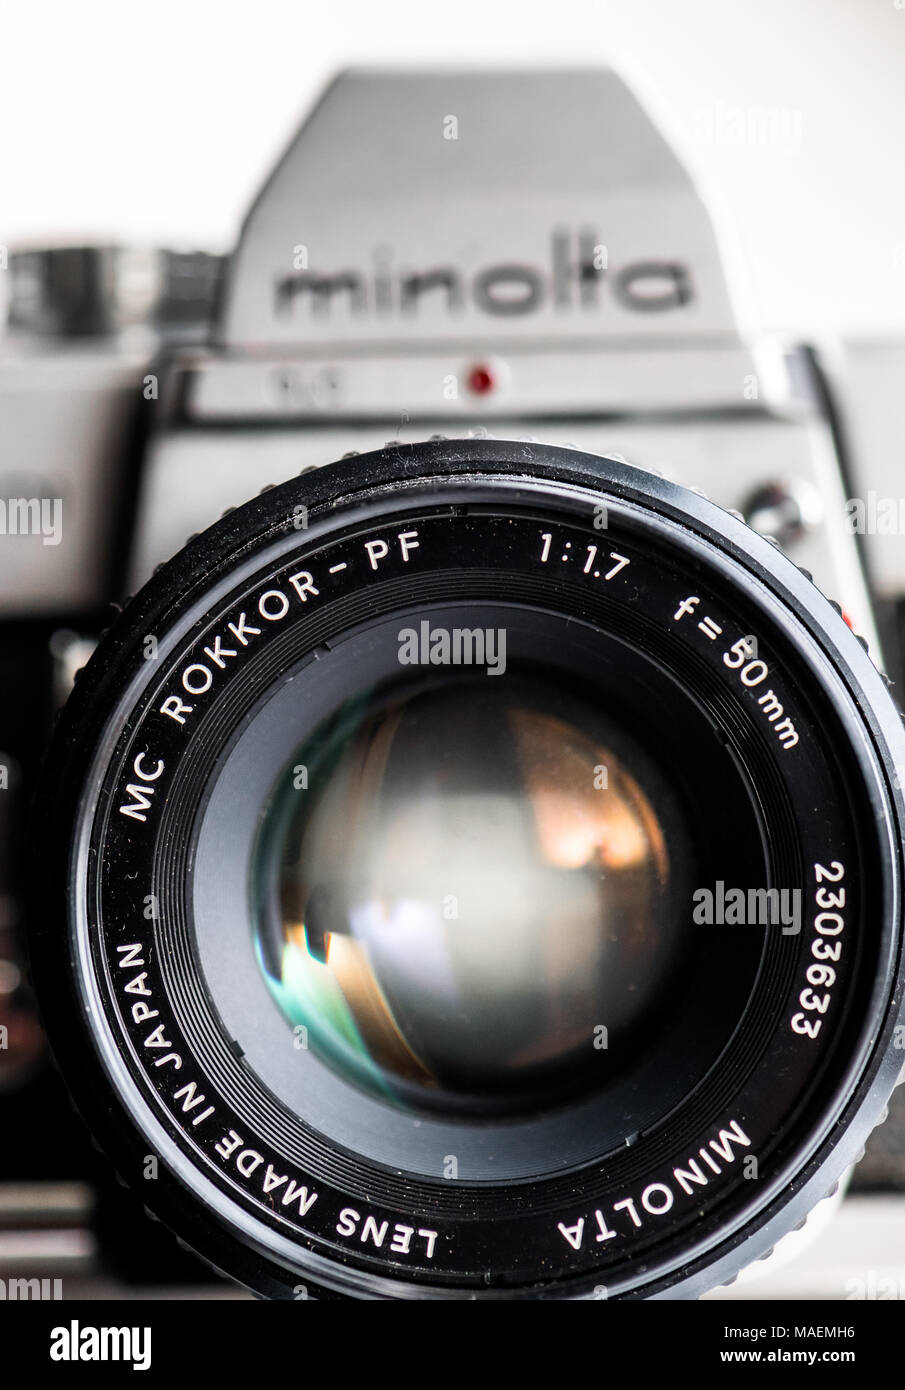 Minolta SRT 101 35mm Fotocamera manuale dagli anni sessanta. Foto Stock